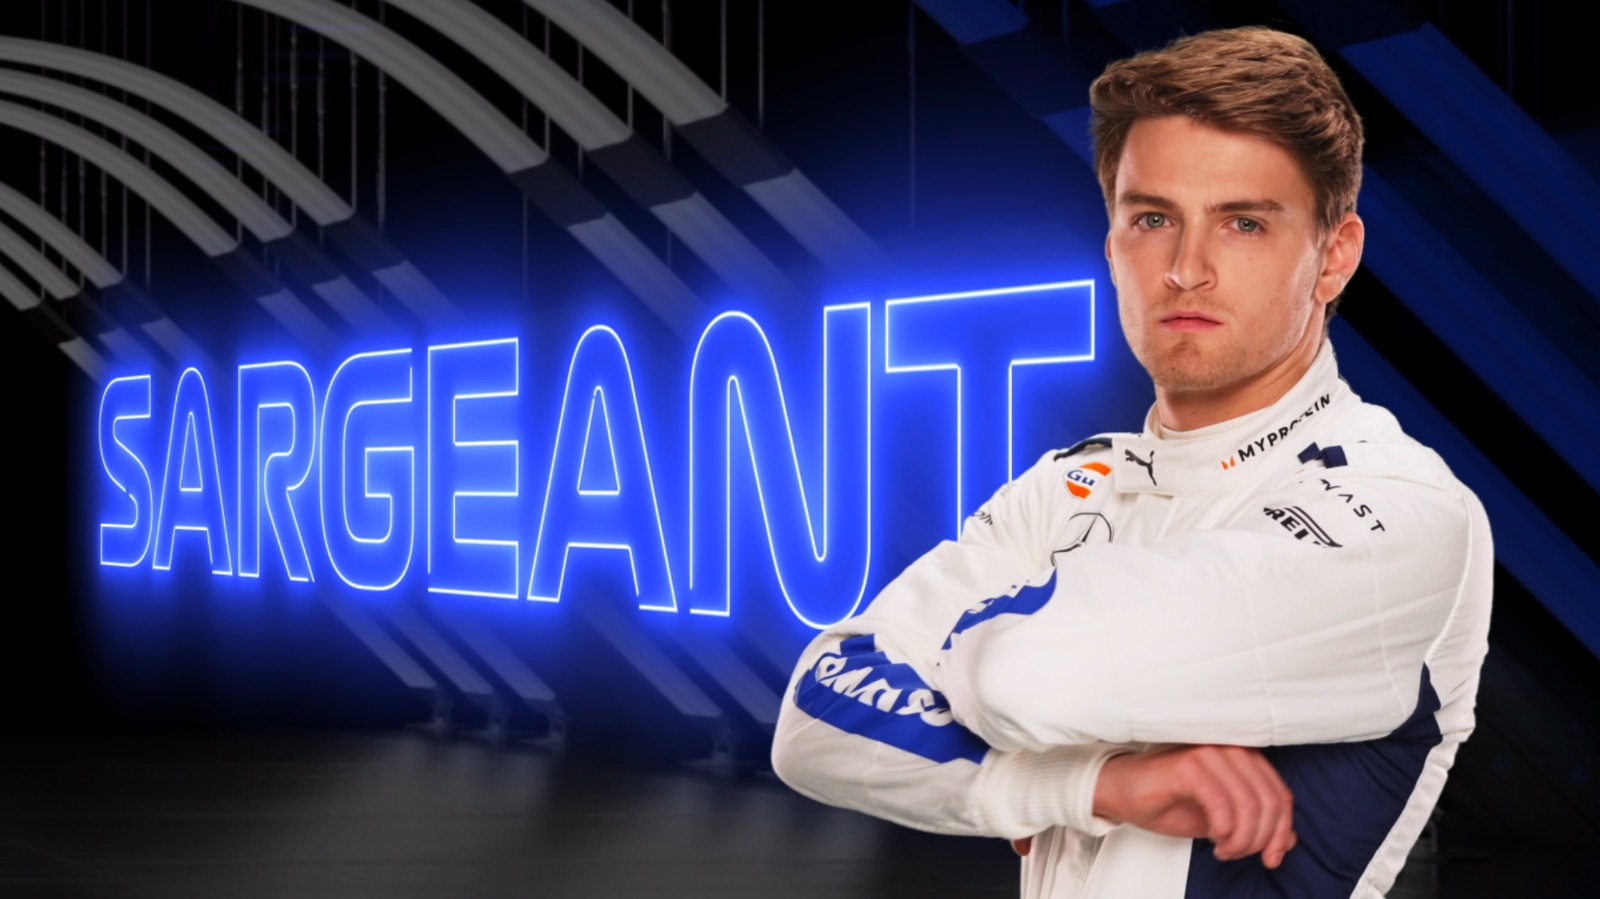 HOMETOWN HERO: Logan Sargeant gears up for Miami GP